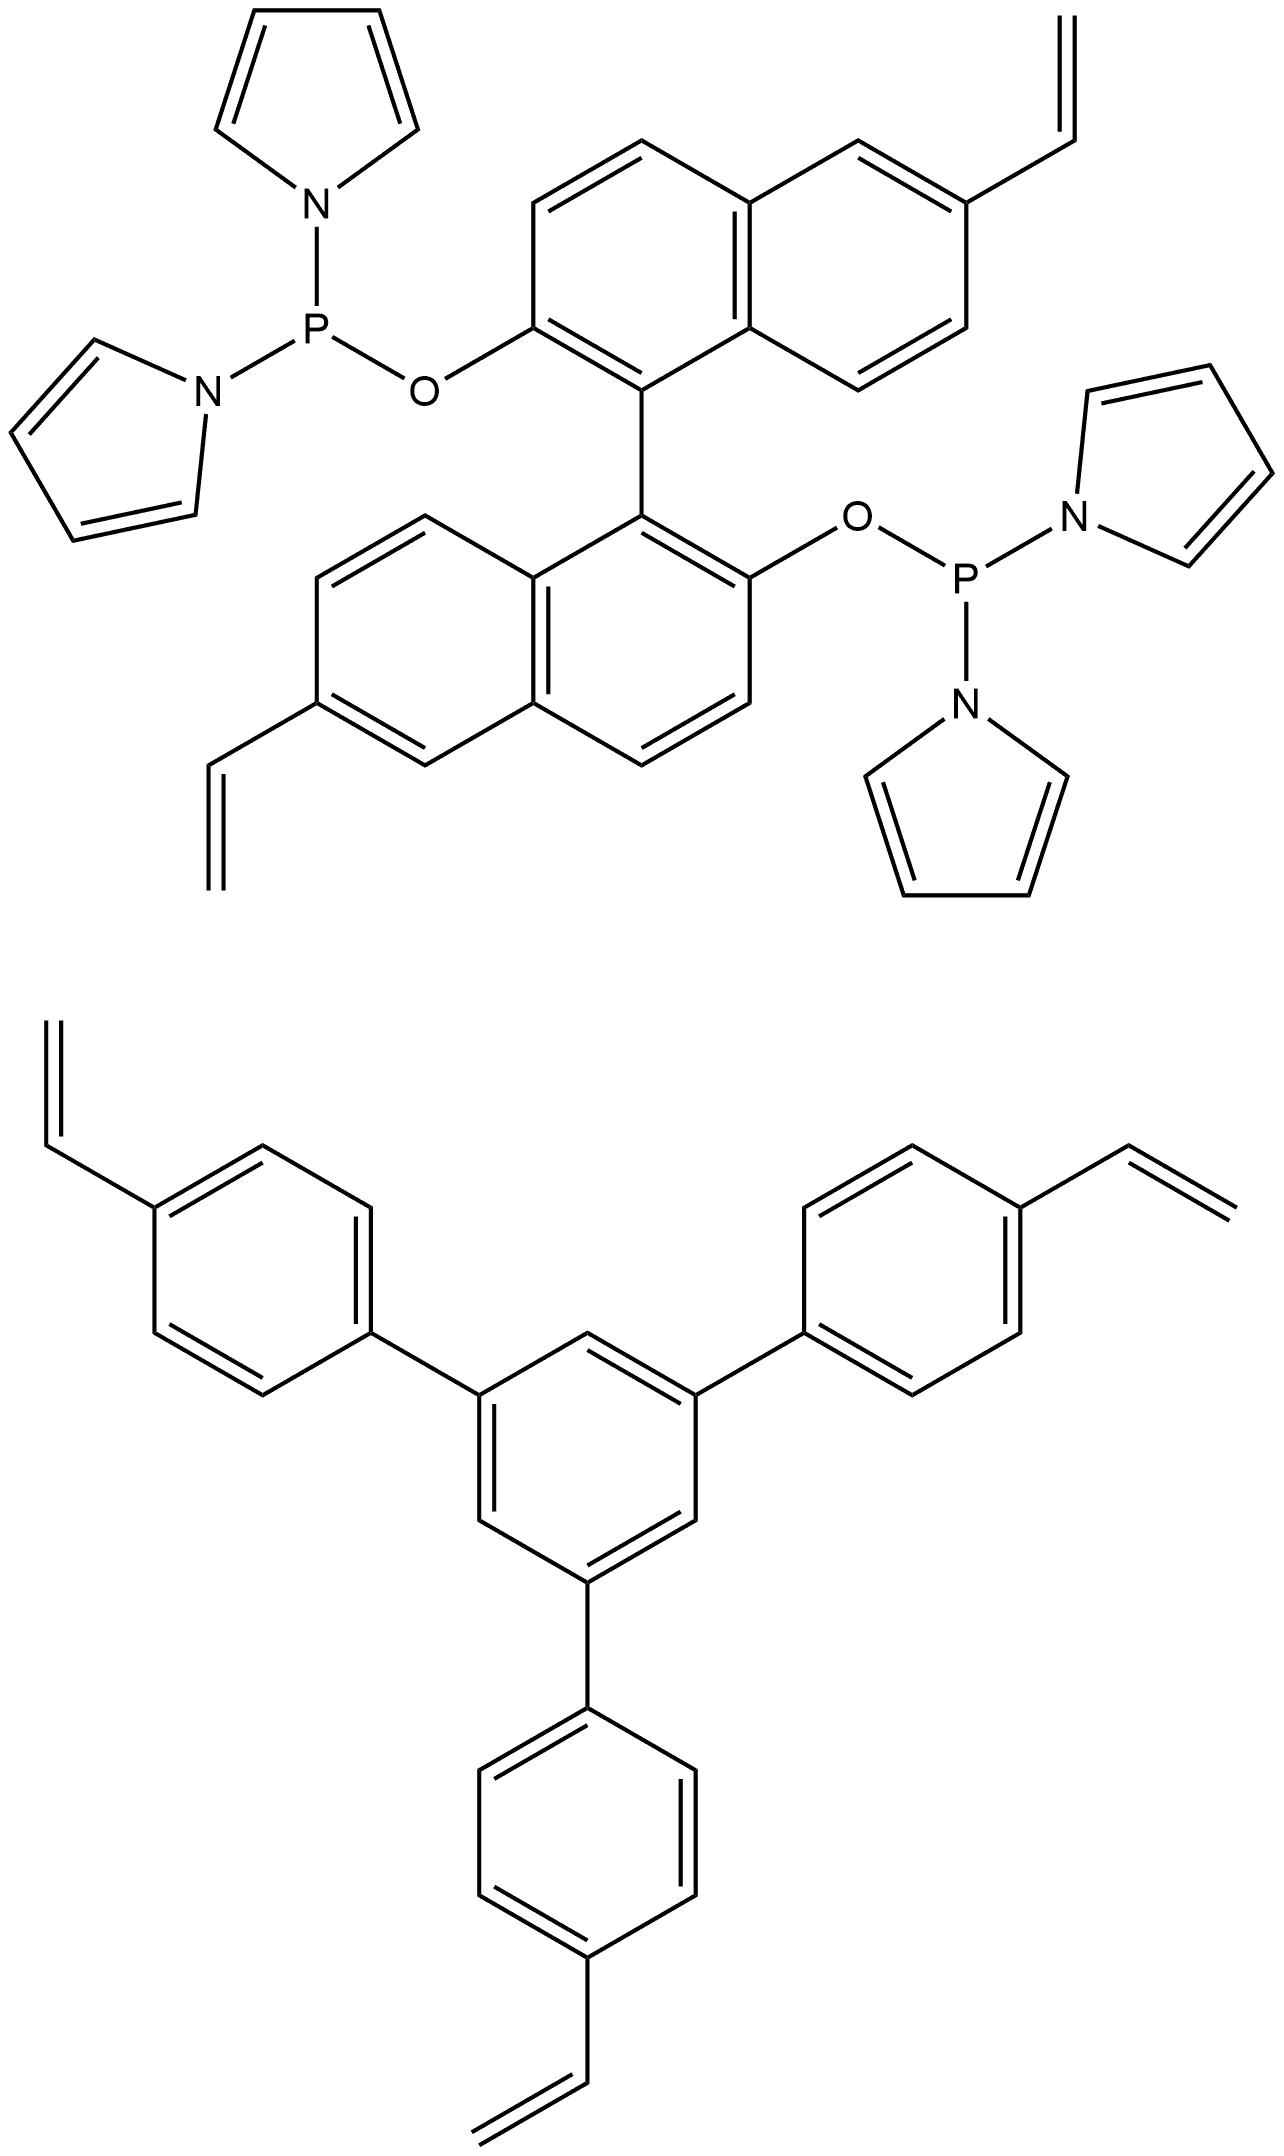 POP-BINAPa&Ph|均三苯基苯-BINAPA共聚物